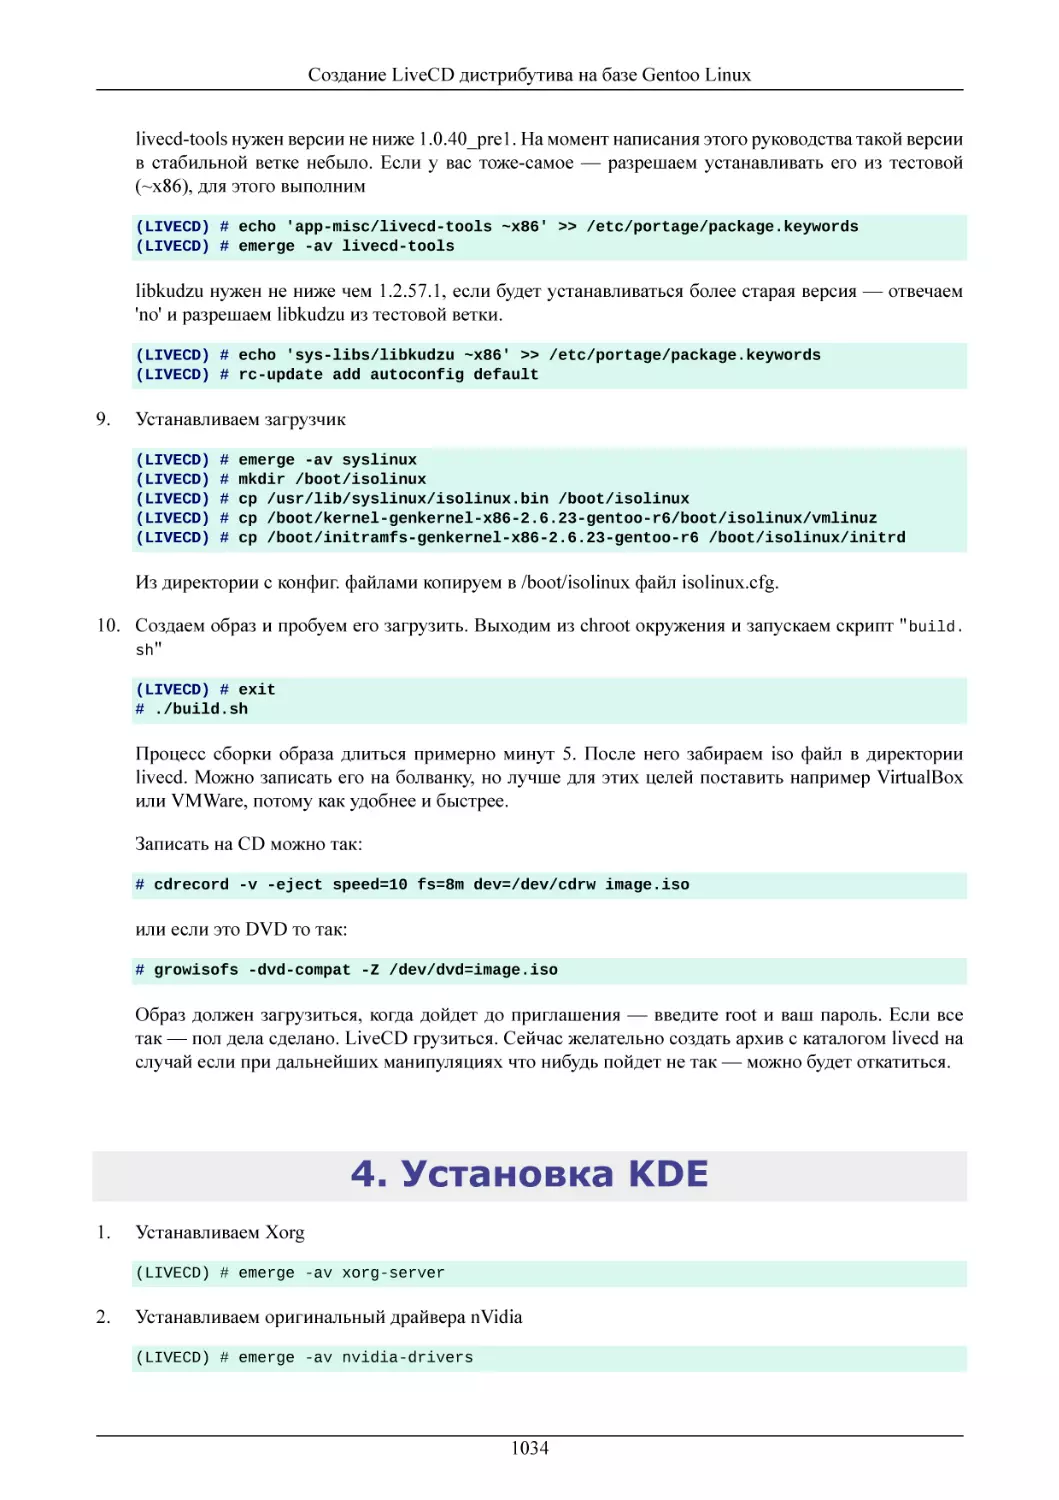 Установка KDE